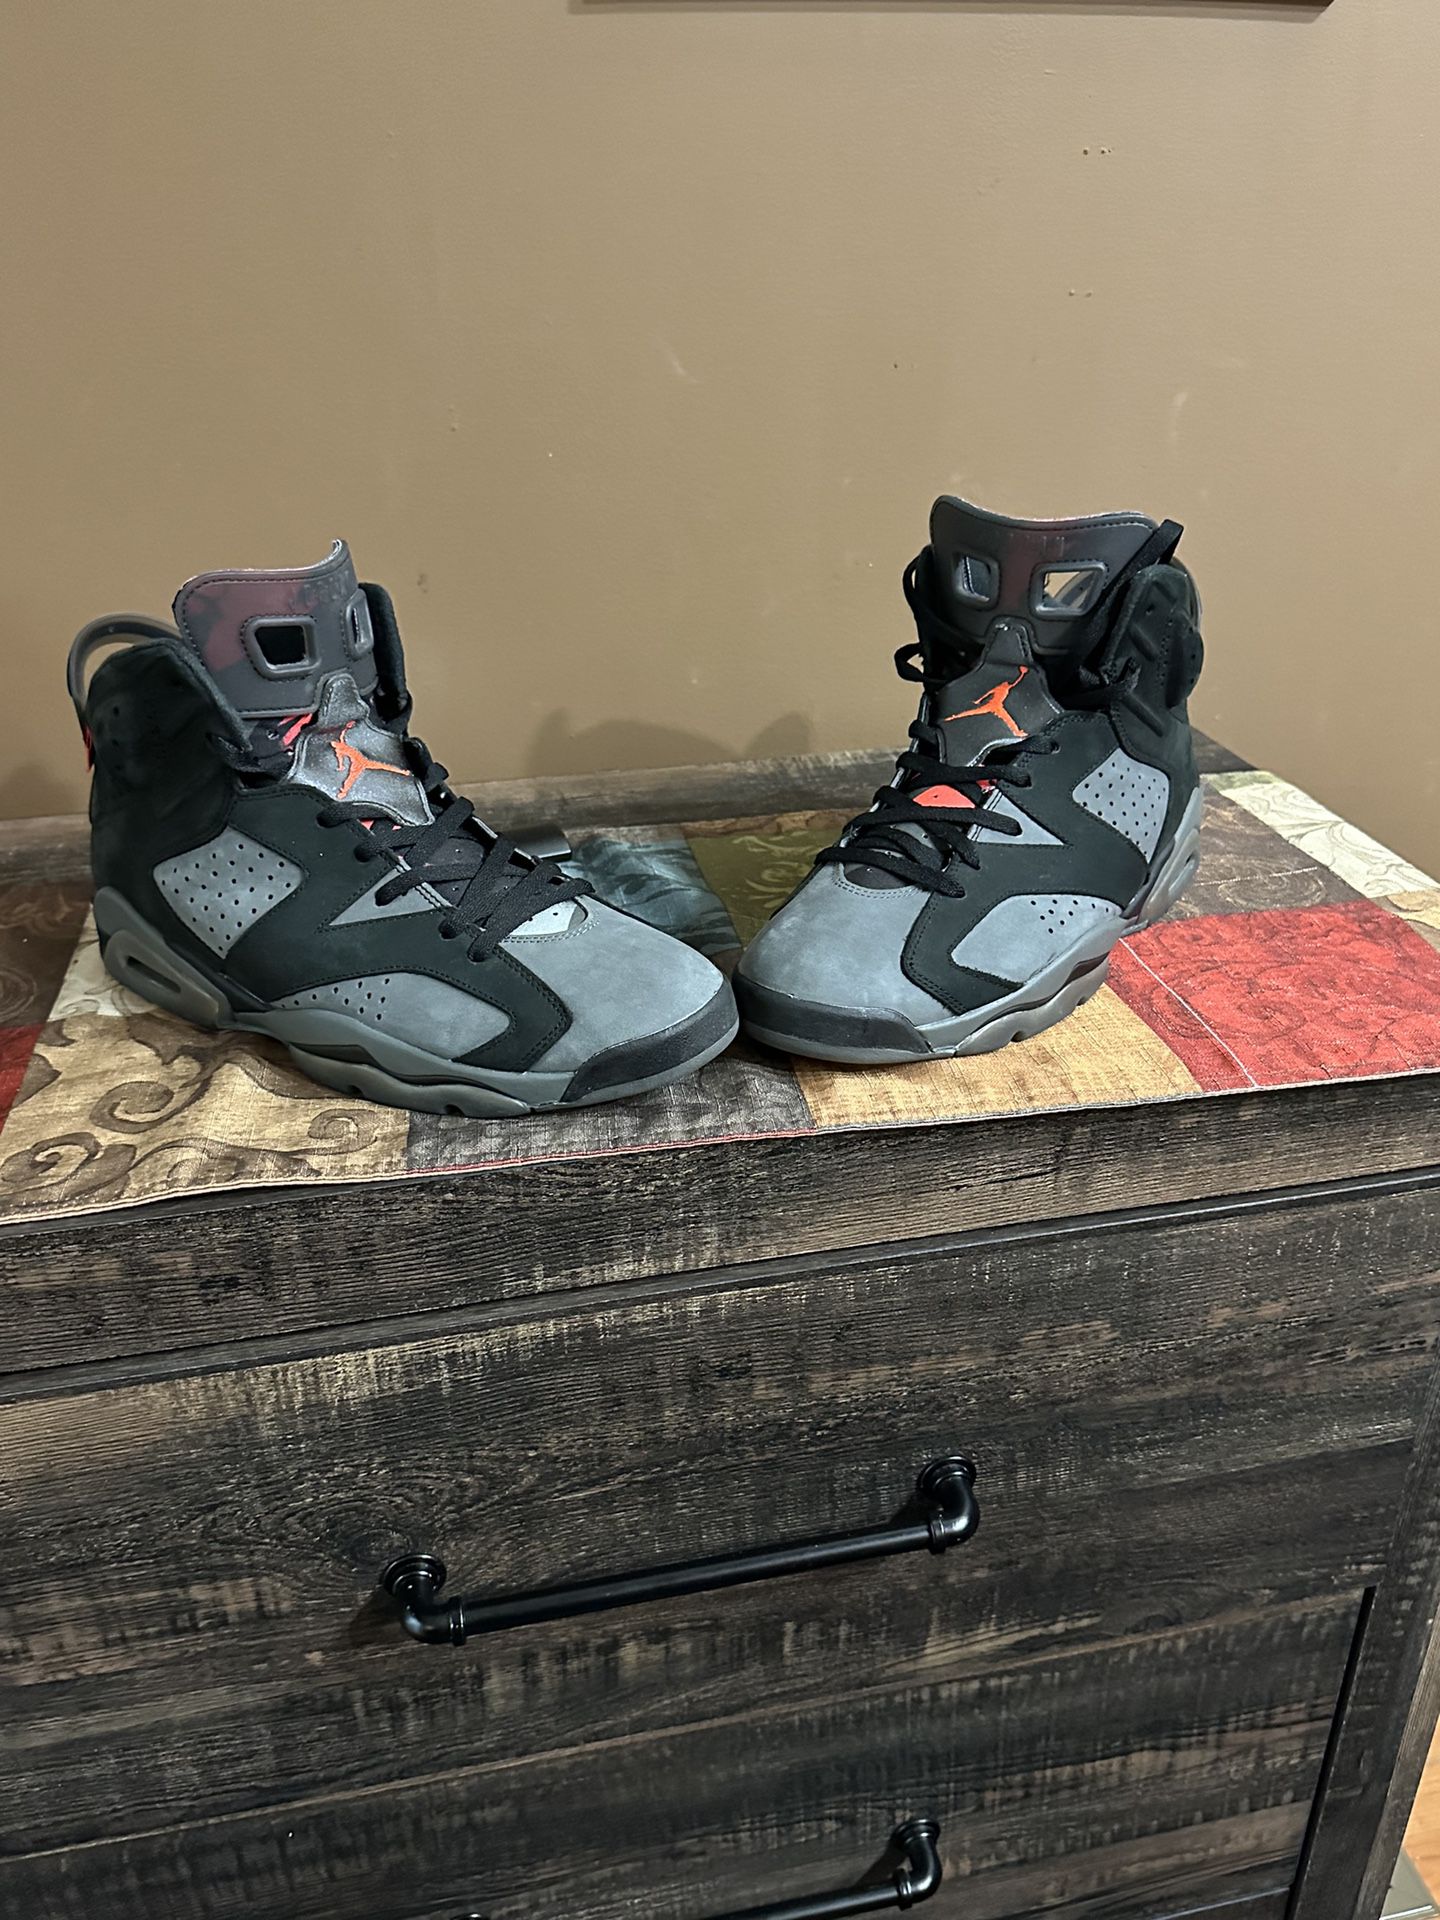 Jordan 1 Gray/Black. Size 14